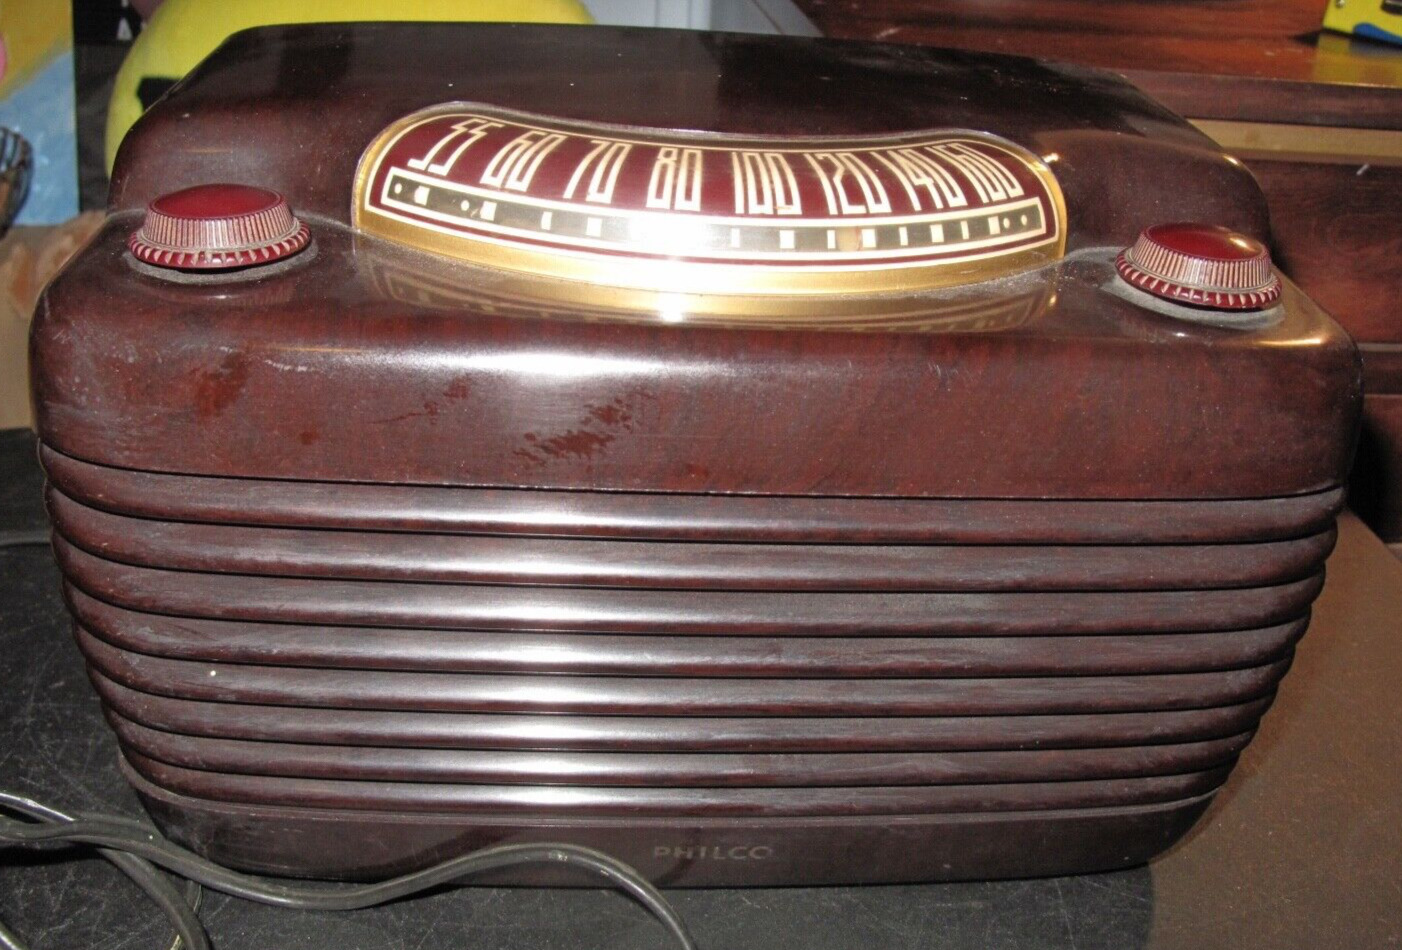 Old Antique 1946 Bakelite Vintage PHILCO TUBE RADIO Model 46-420 - Collectible